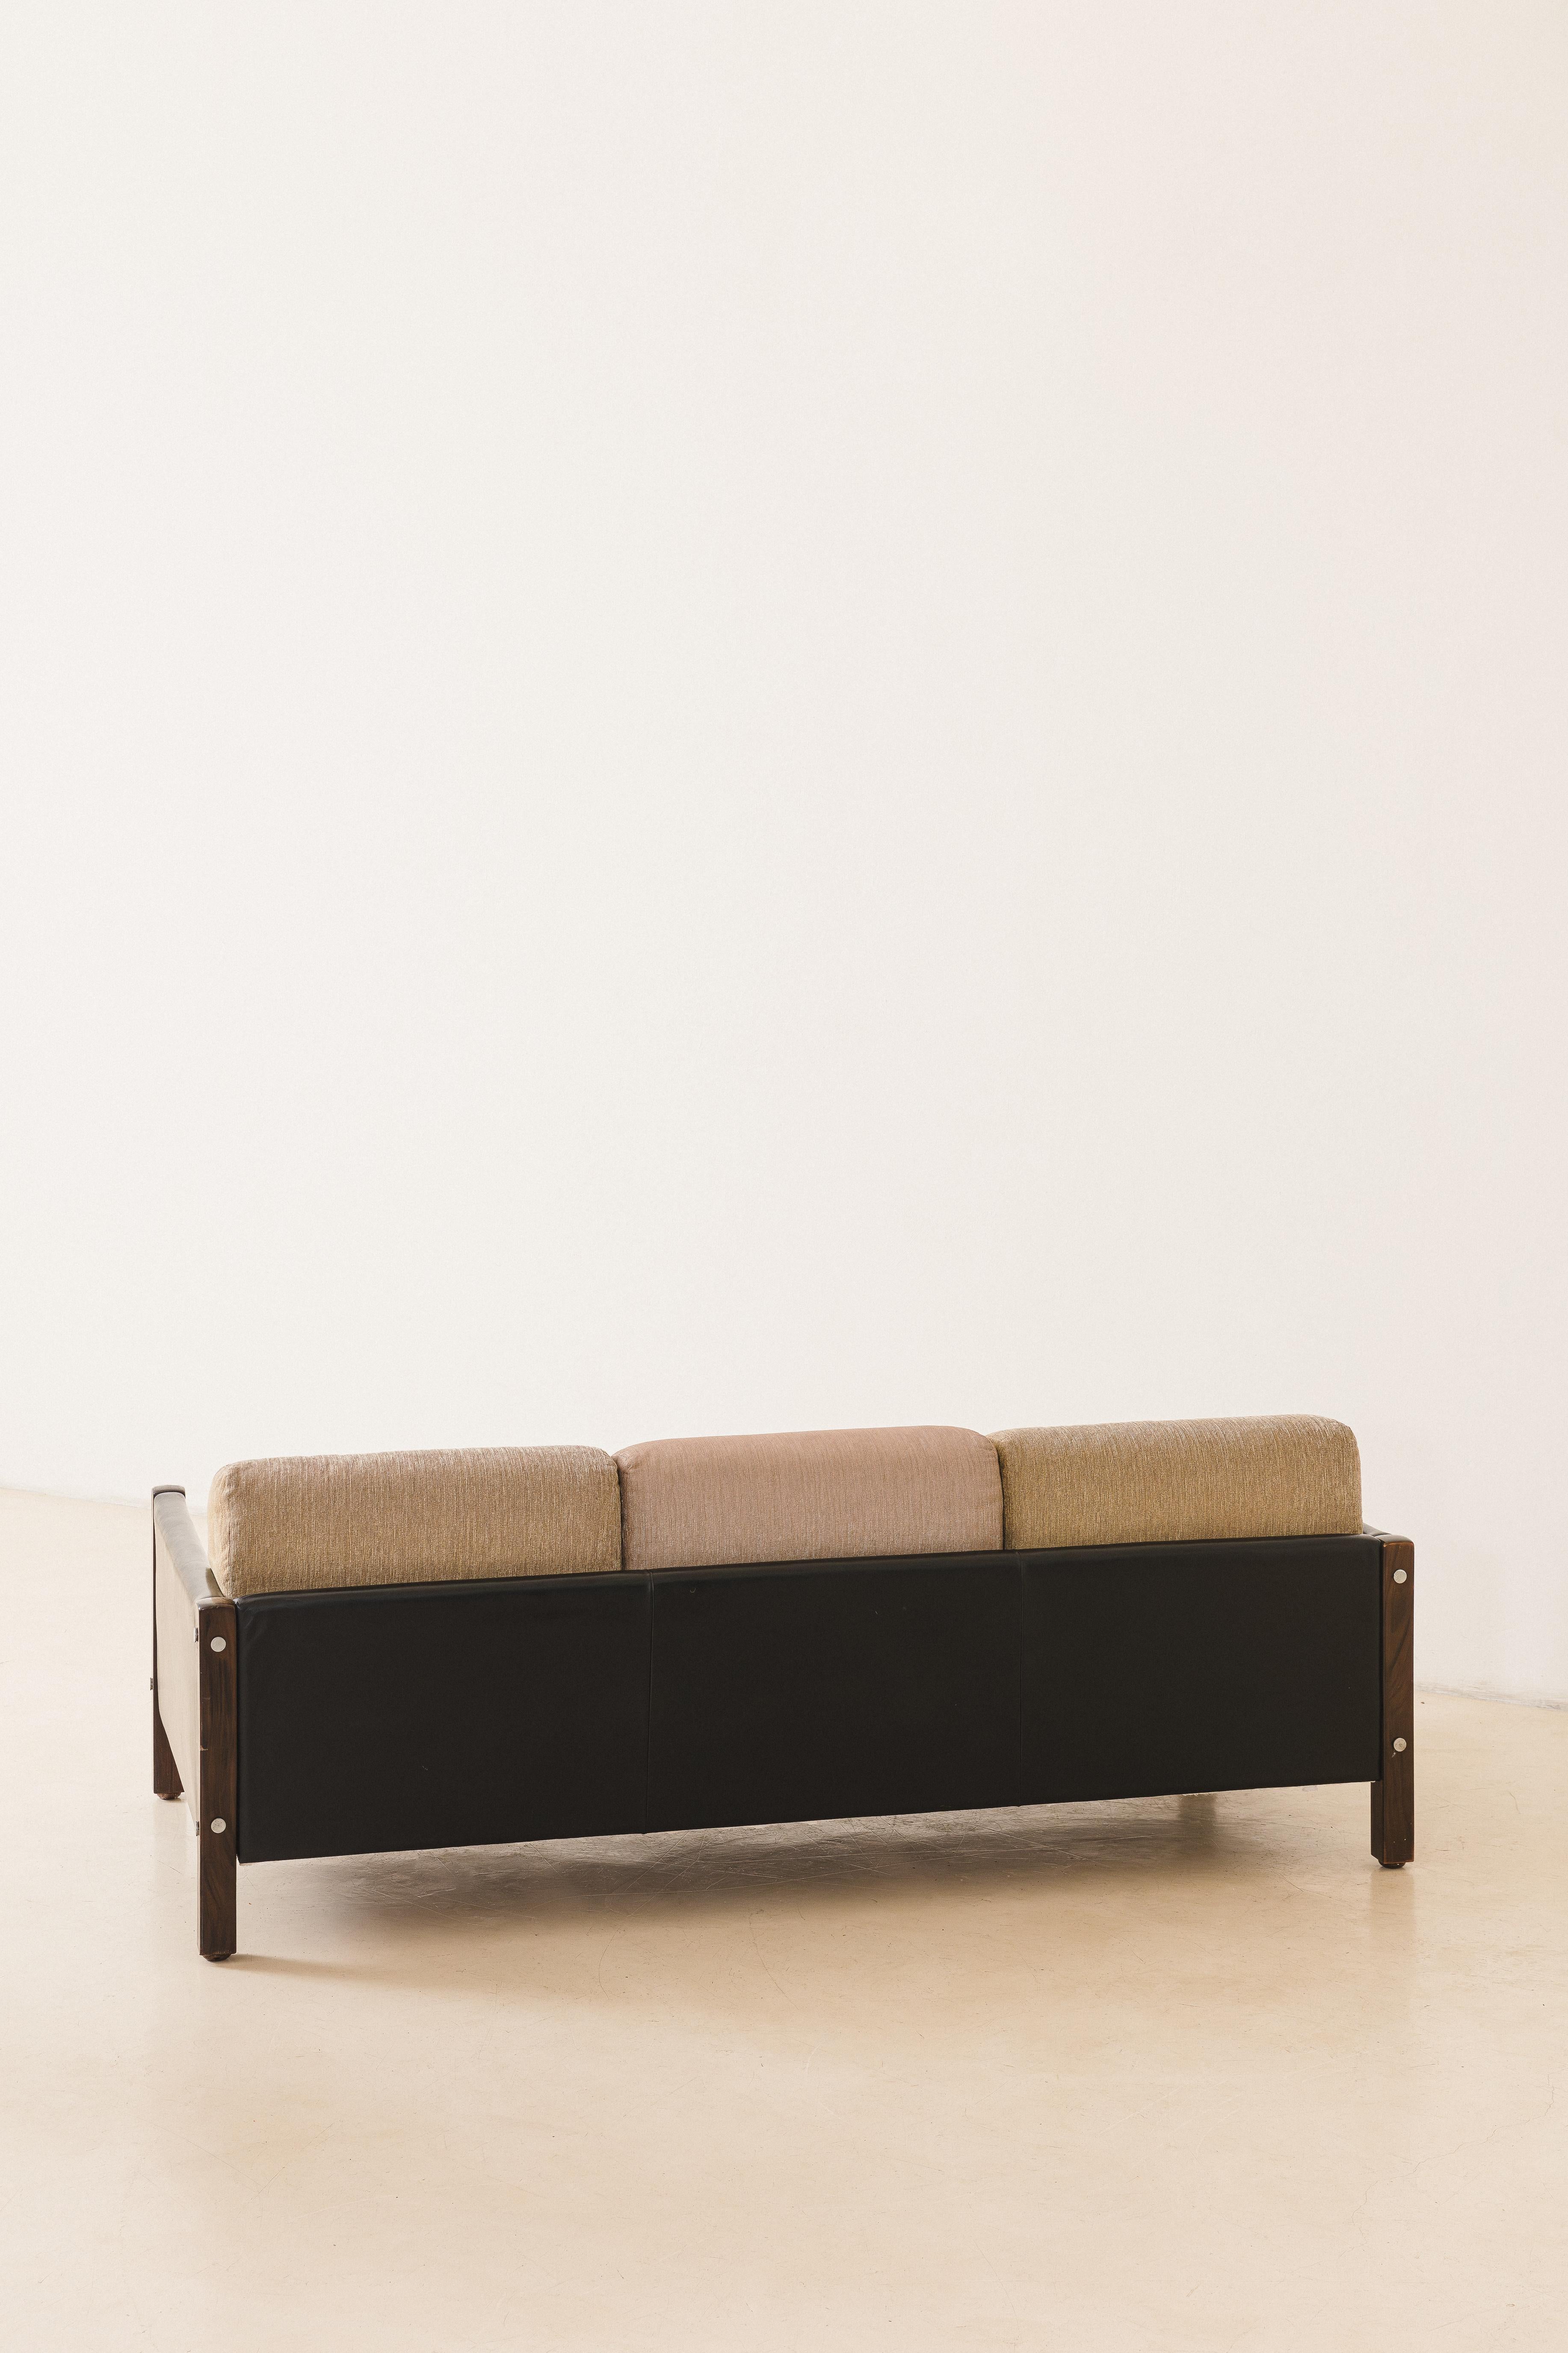 Brazilian Rosewood Three-Seat Millor Sofa, Sergio Rodrigues Modern Design, Brazil, 1960s For Sale